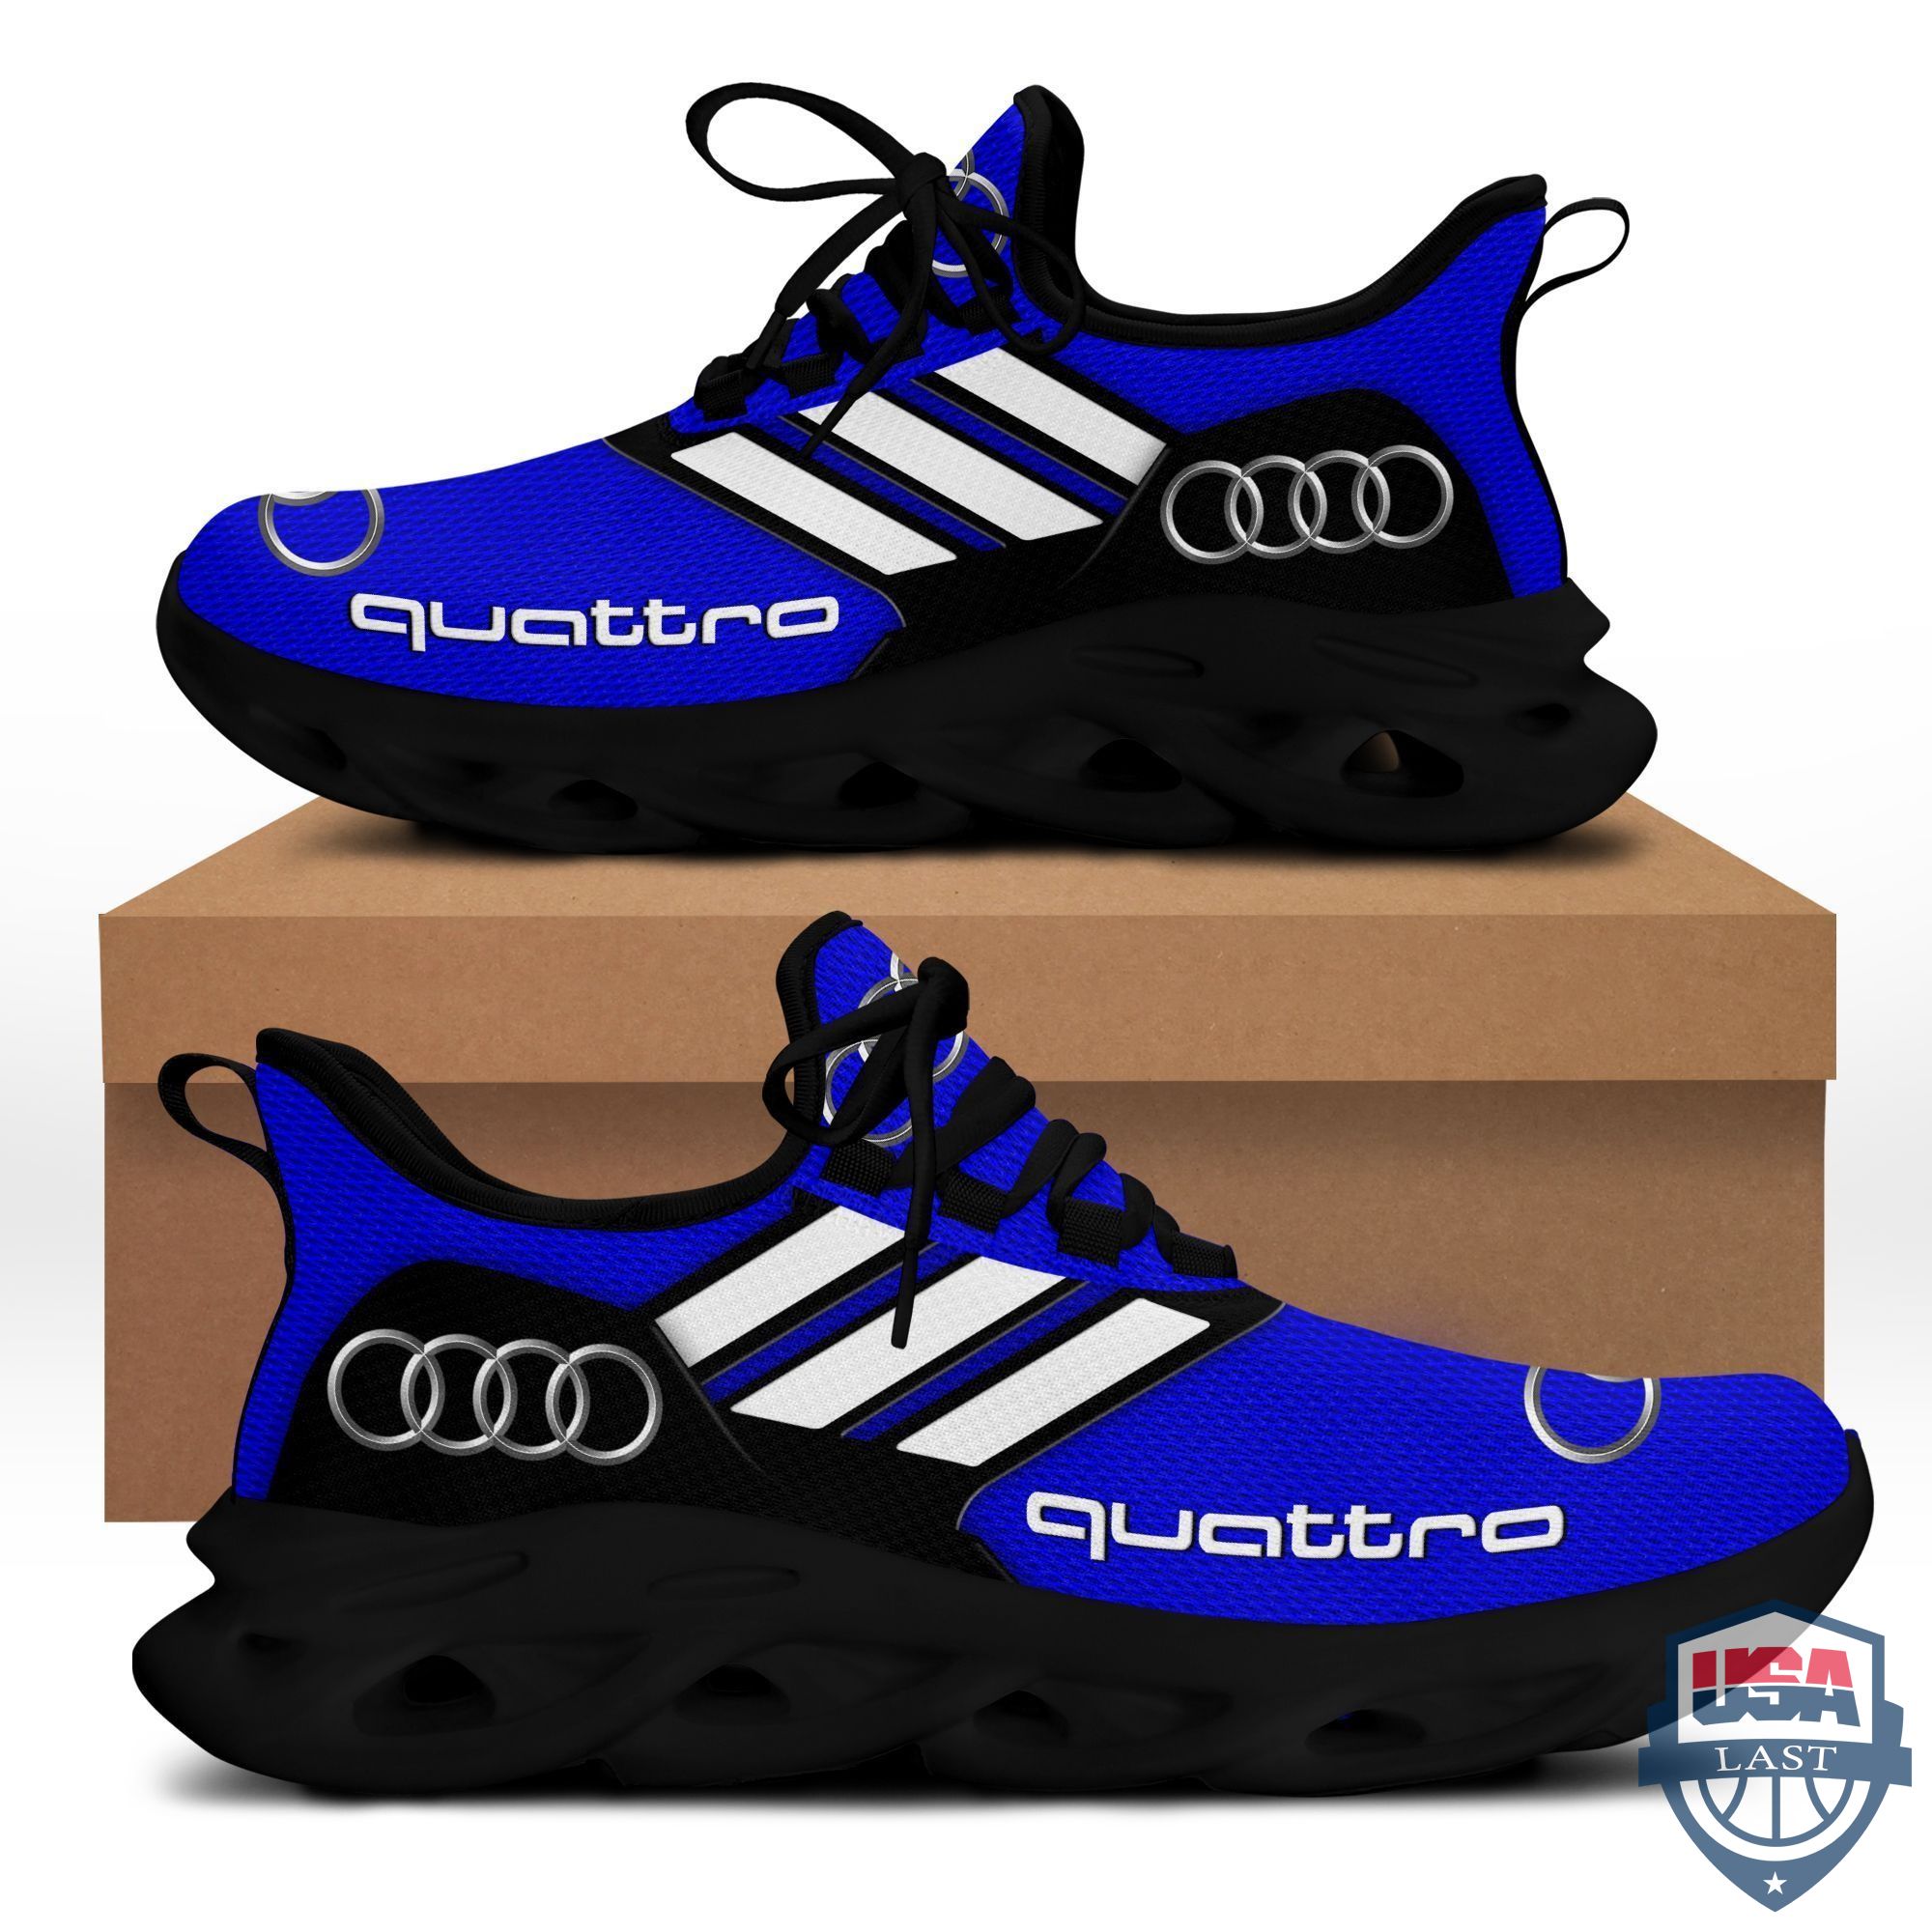 Top Trending – Audi Quattro Sport Shoes Max Soul Sneaker Black Version